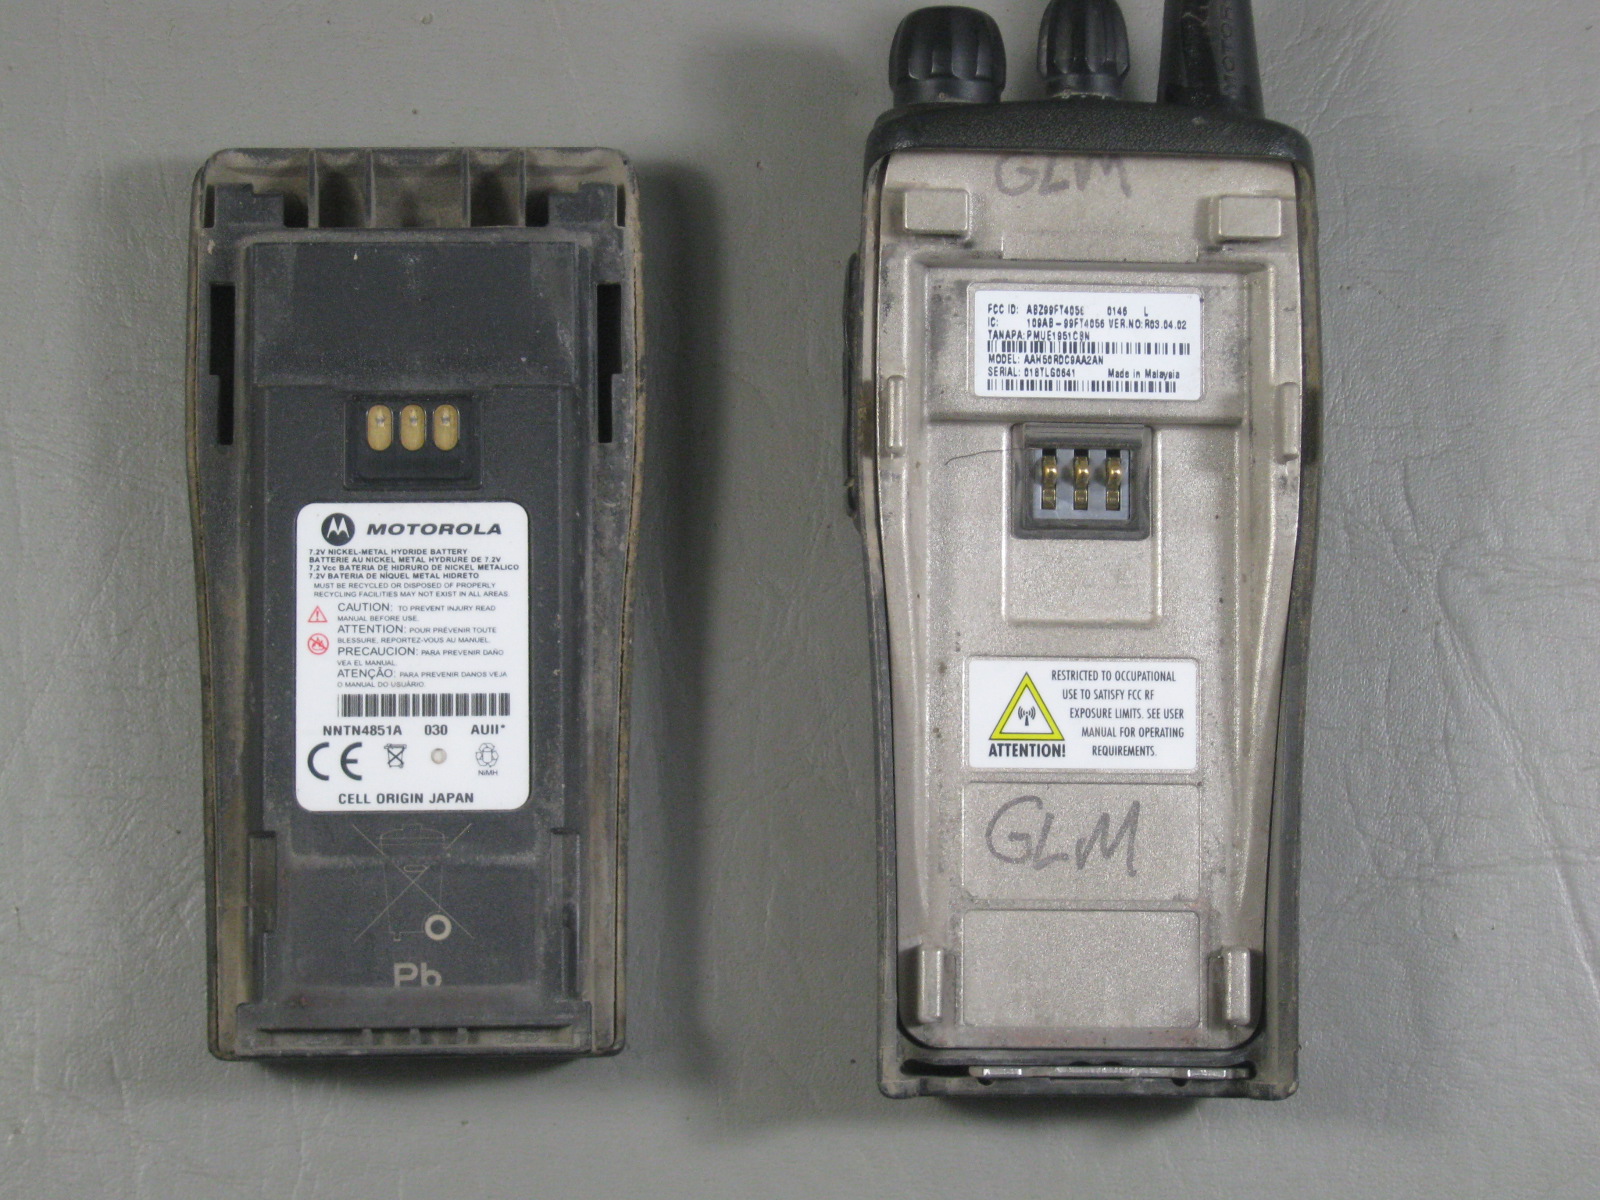 2 Motorola Radius CP200 UHF Narrow Band 2-Way Commercial Radios Tested + Working 5